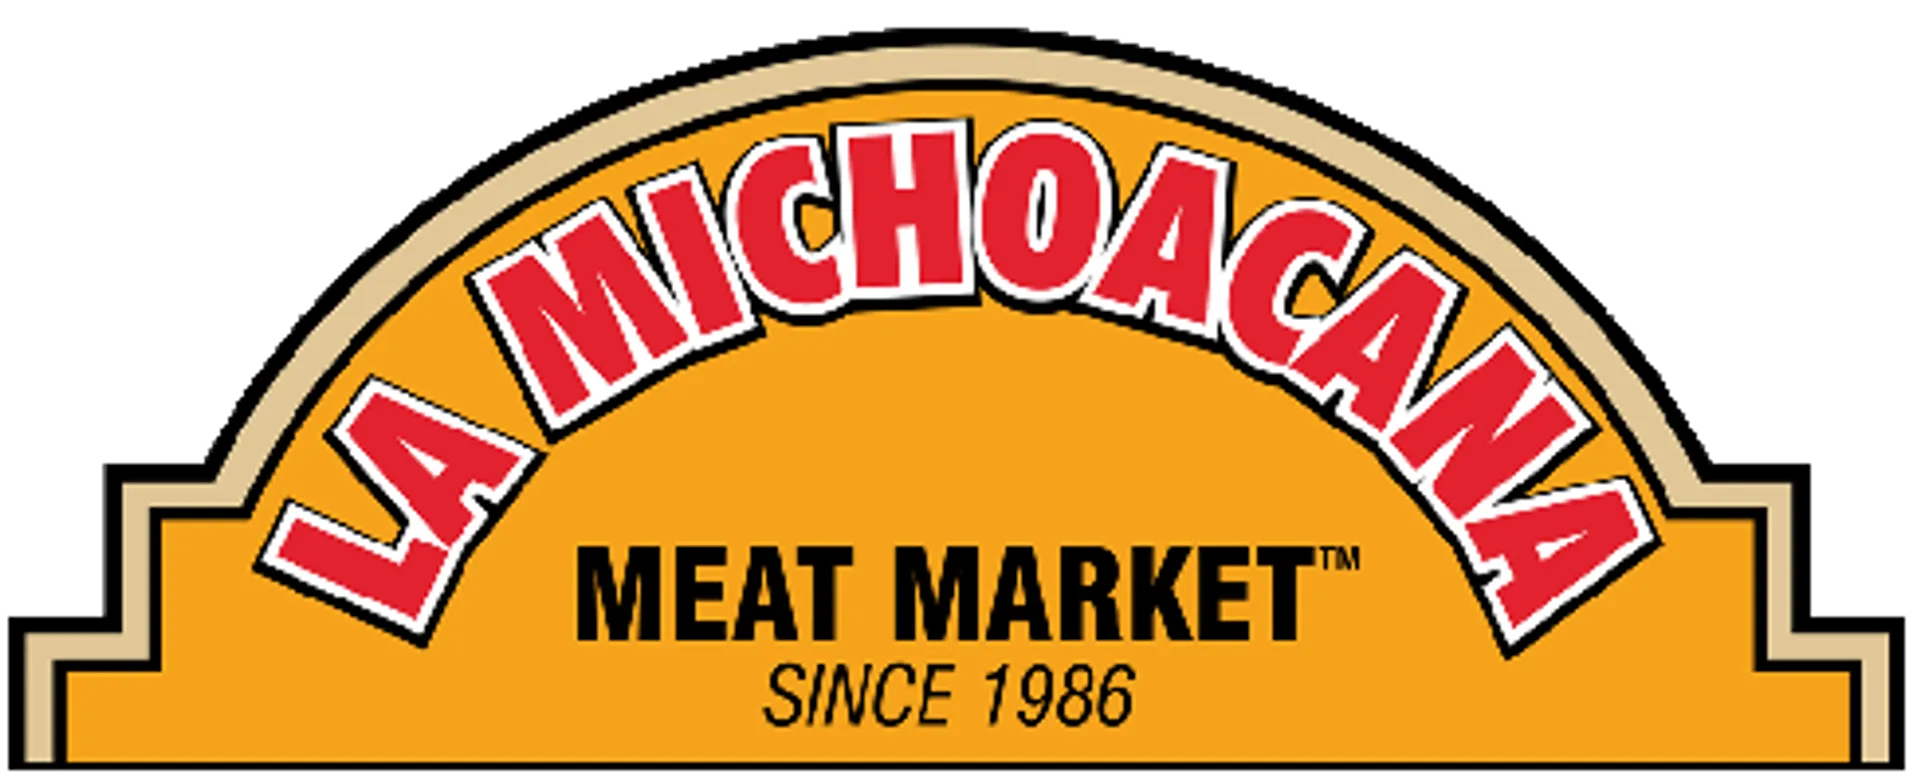 LA MICHOACANA MEAT MARKET logo